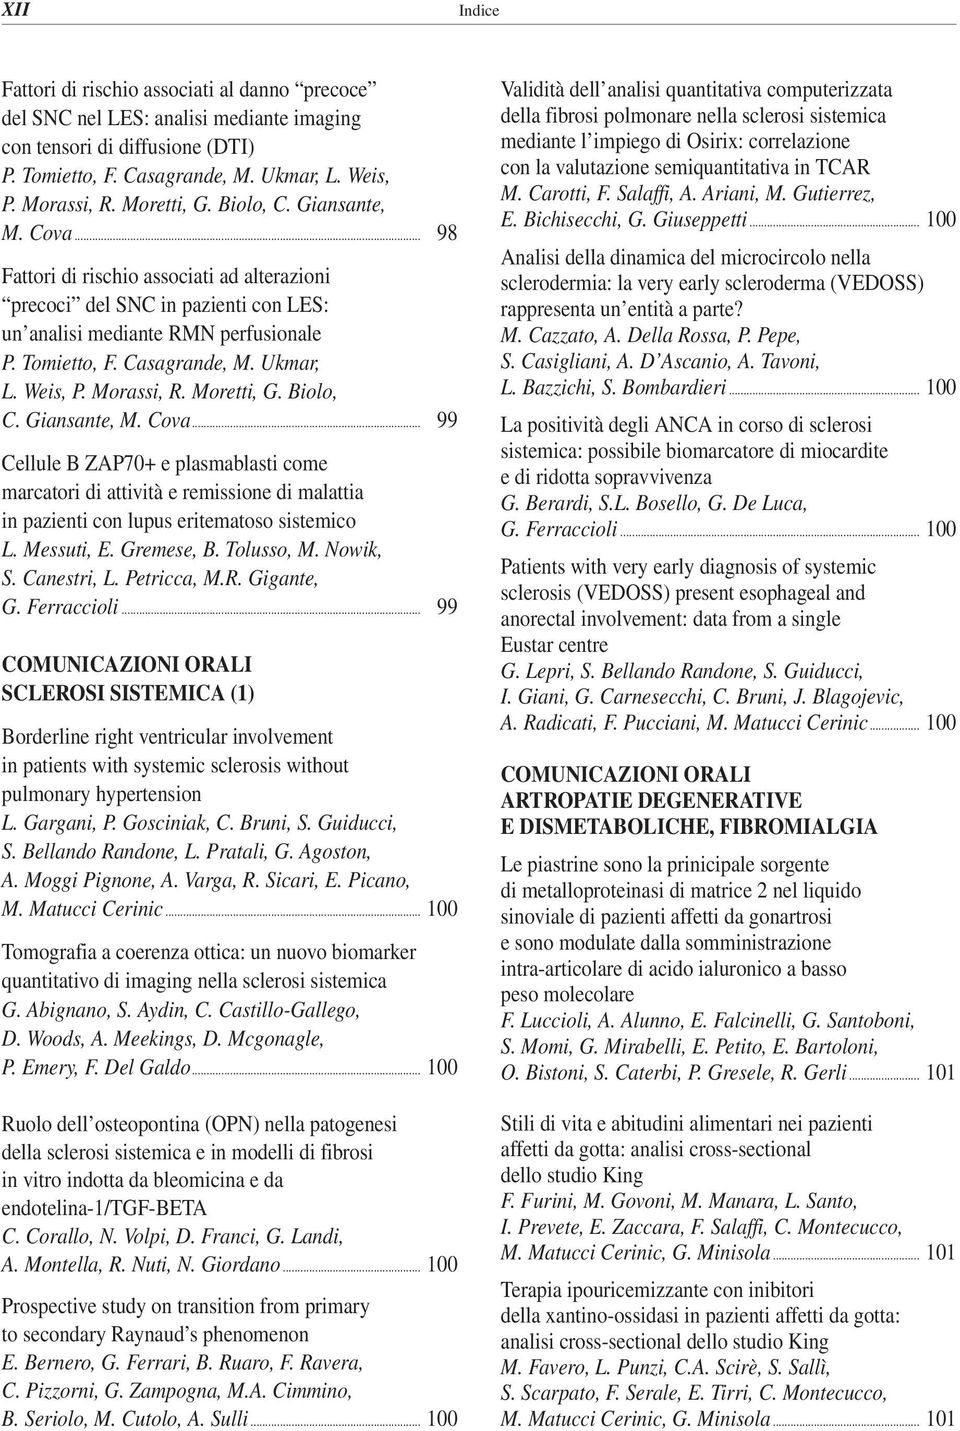 Ukmar, L. Weis, P. Morassi, R. Moretti, G. Biolo, C. Giansante, M. Cova.